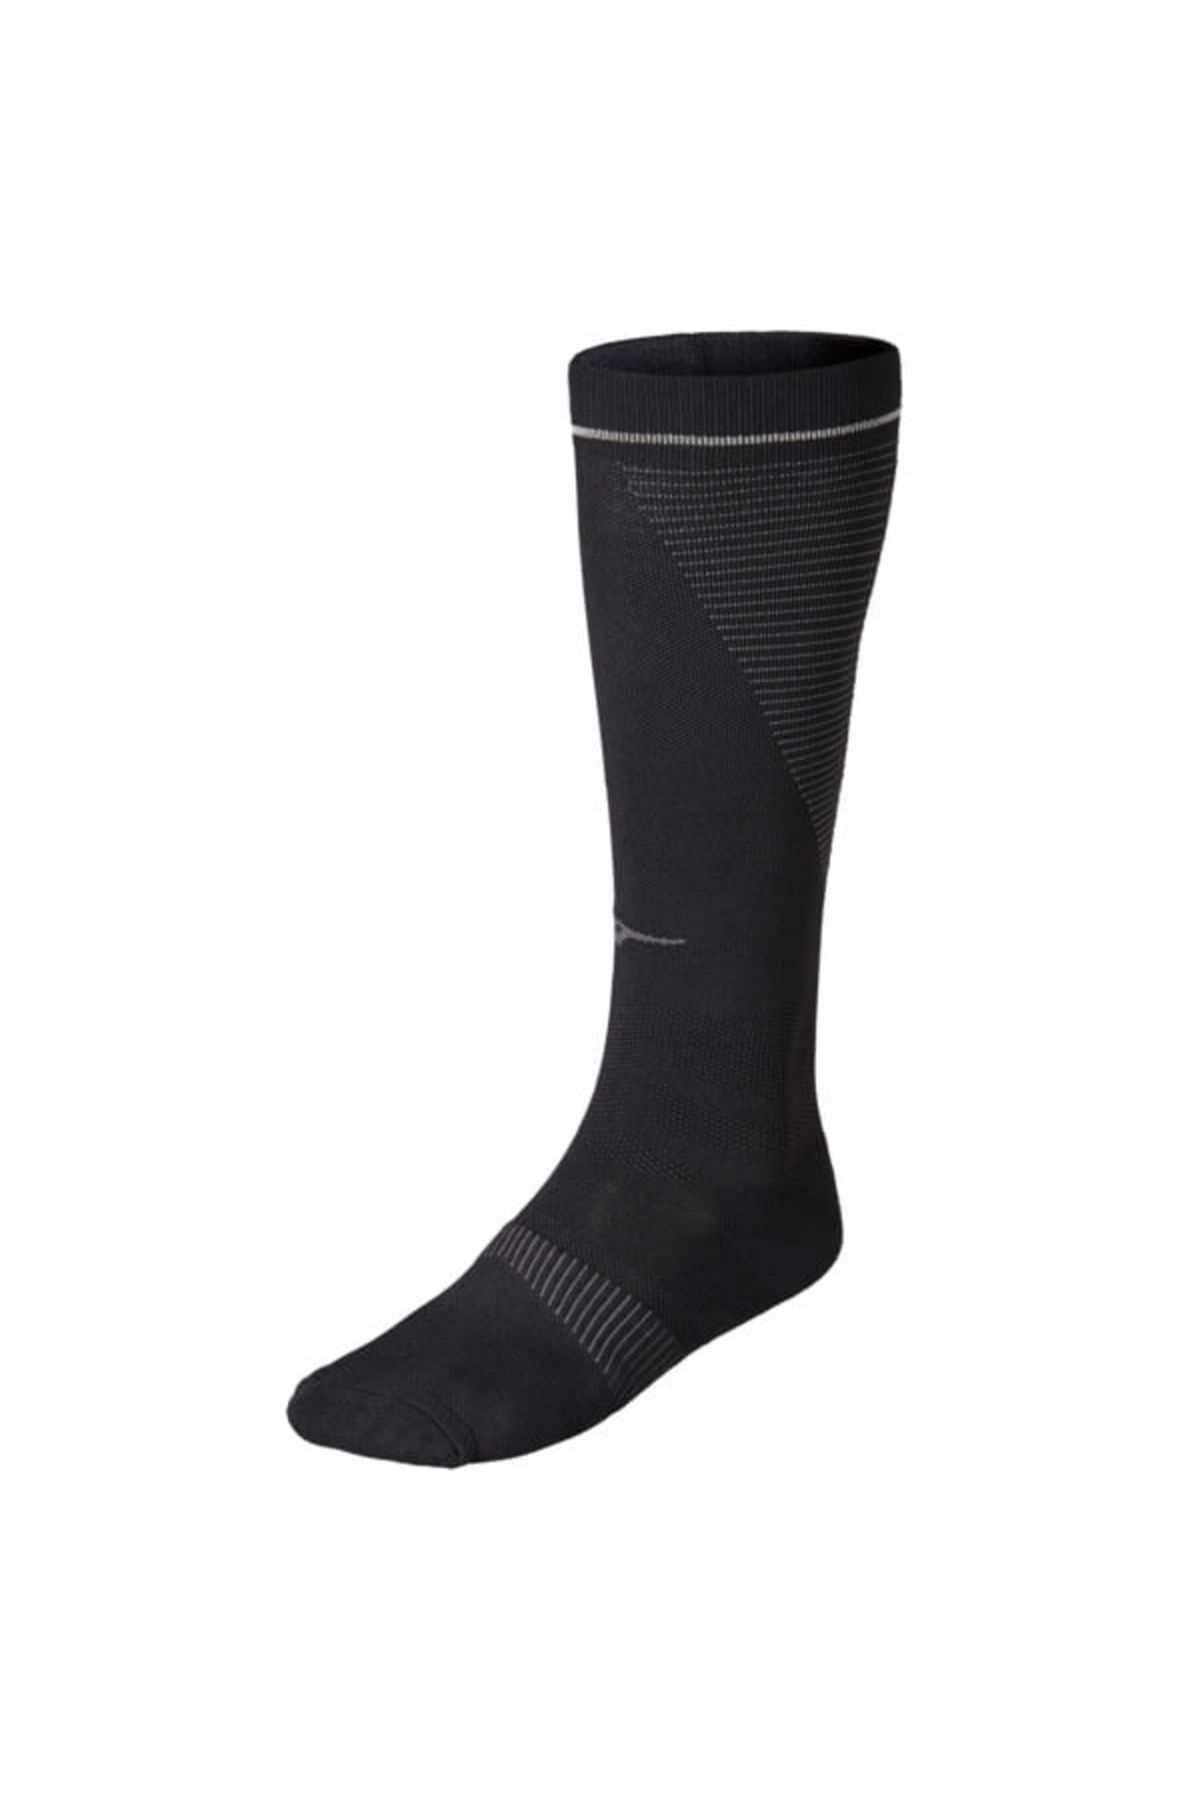 Mizuno Compression Socks Unisex Çorap Siyah